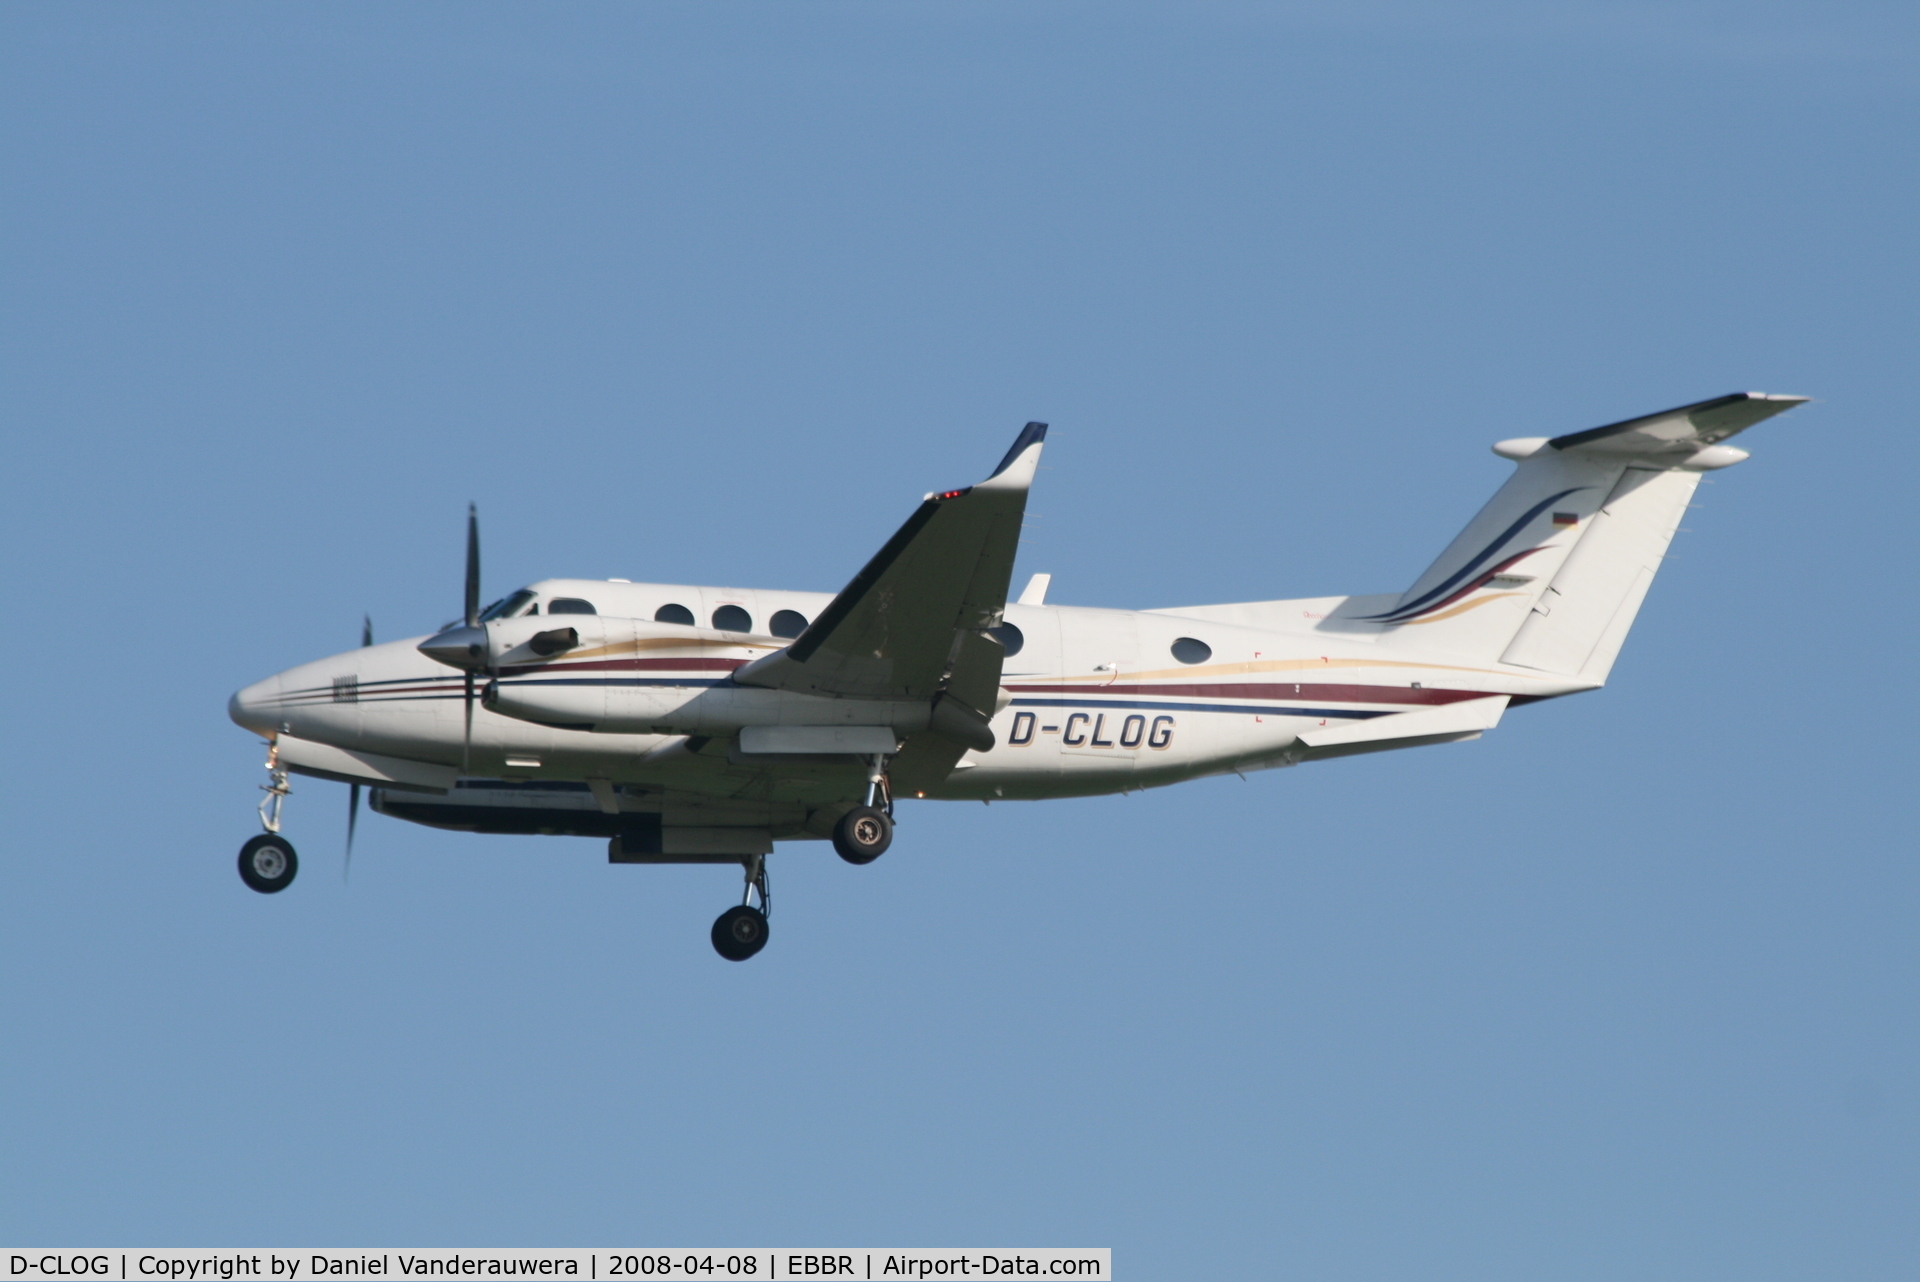 D-CLOG, 2000 Beech Super King Air 350 C/N FL-276, descending to rwy 25L